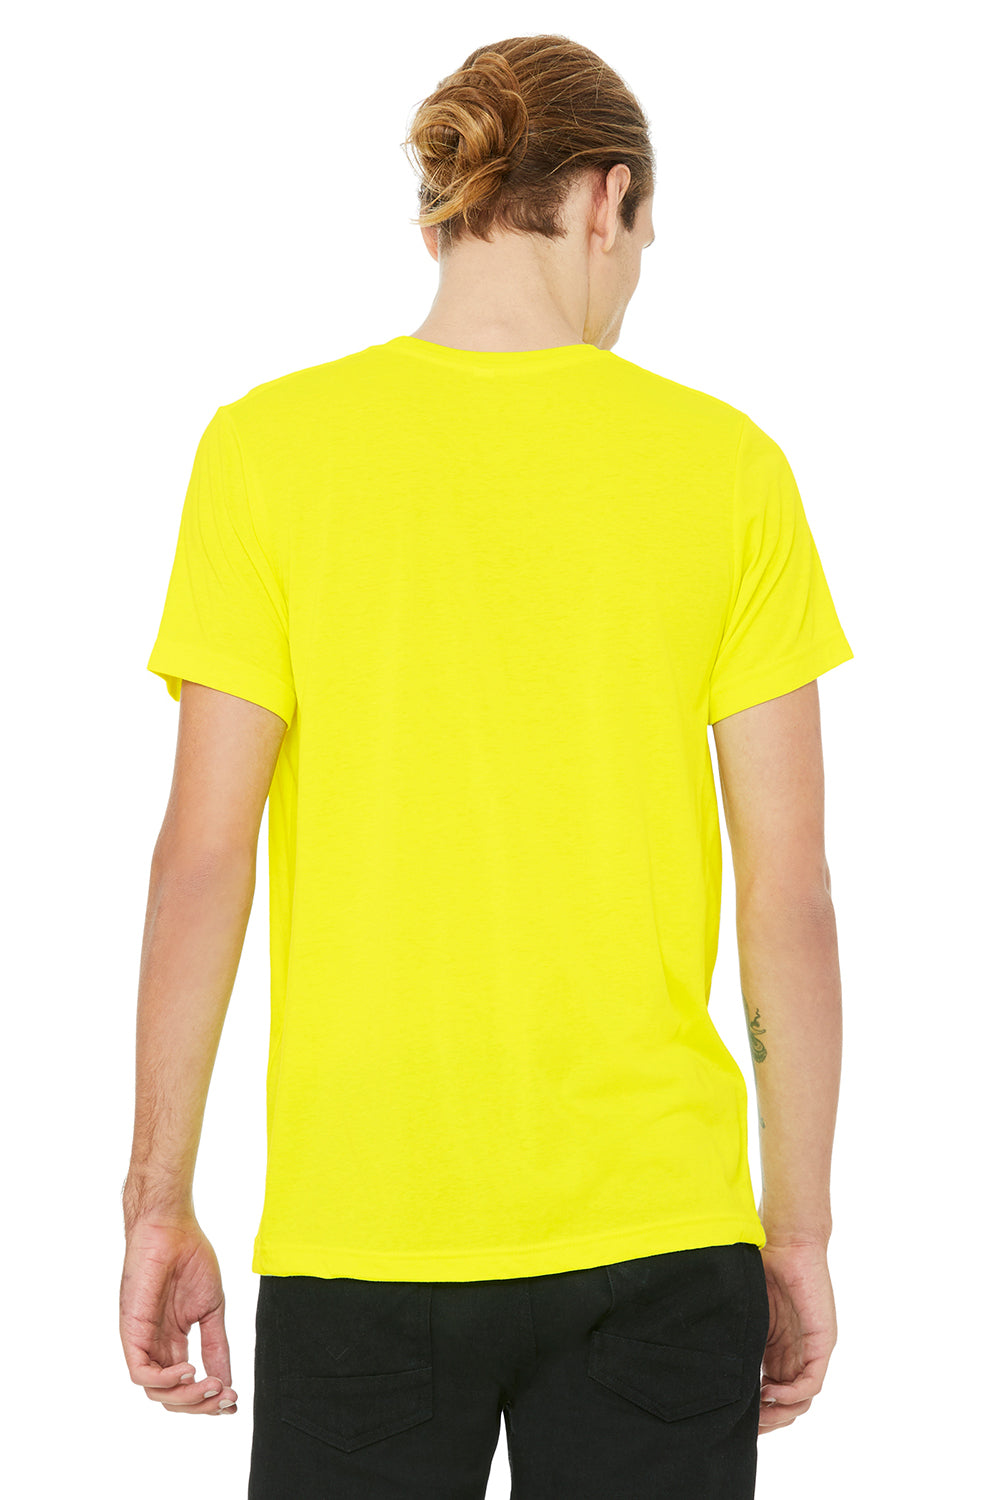 Bella + Canvas 3650 Mens Short Sleeve Crewneck T-Shirt Neon Yellow Back